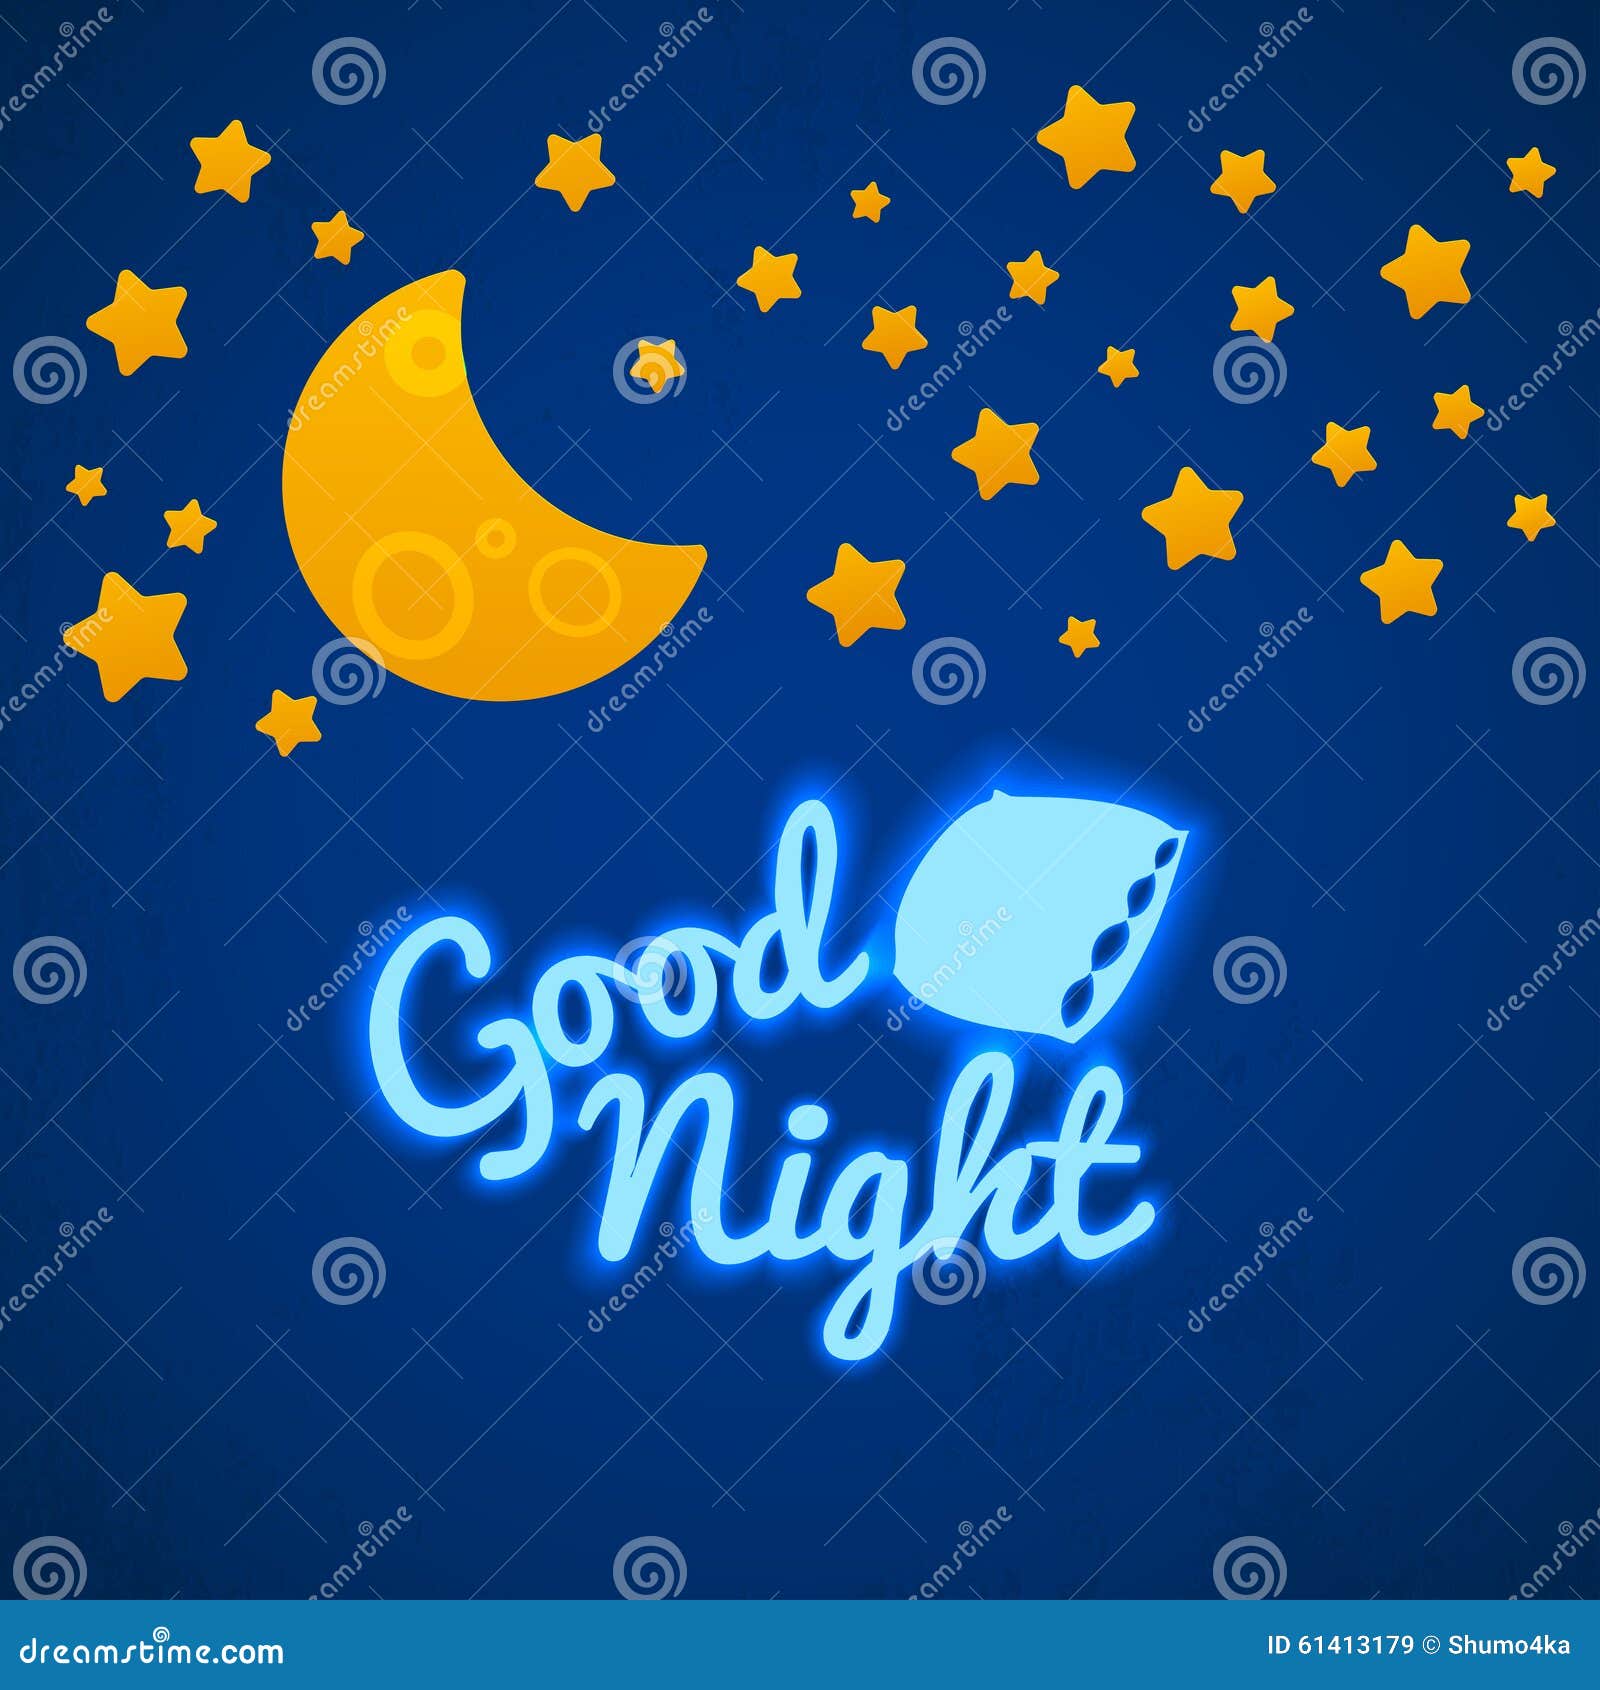 Good Night Bed Time Illustration Stock Illustration - Image: 61413179